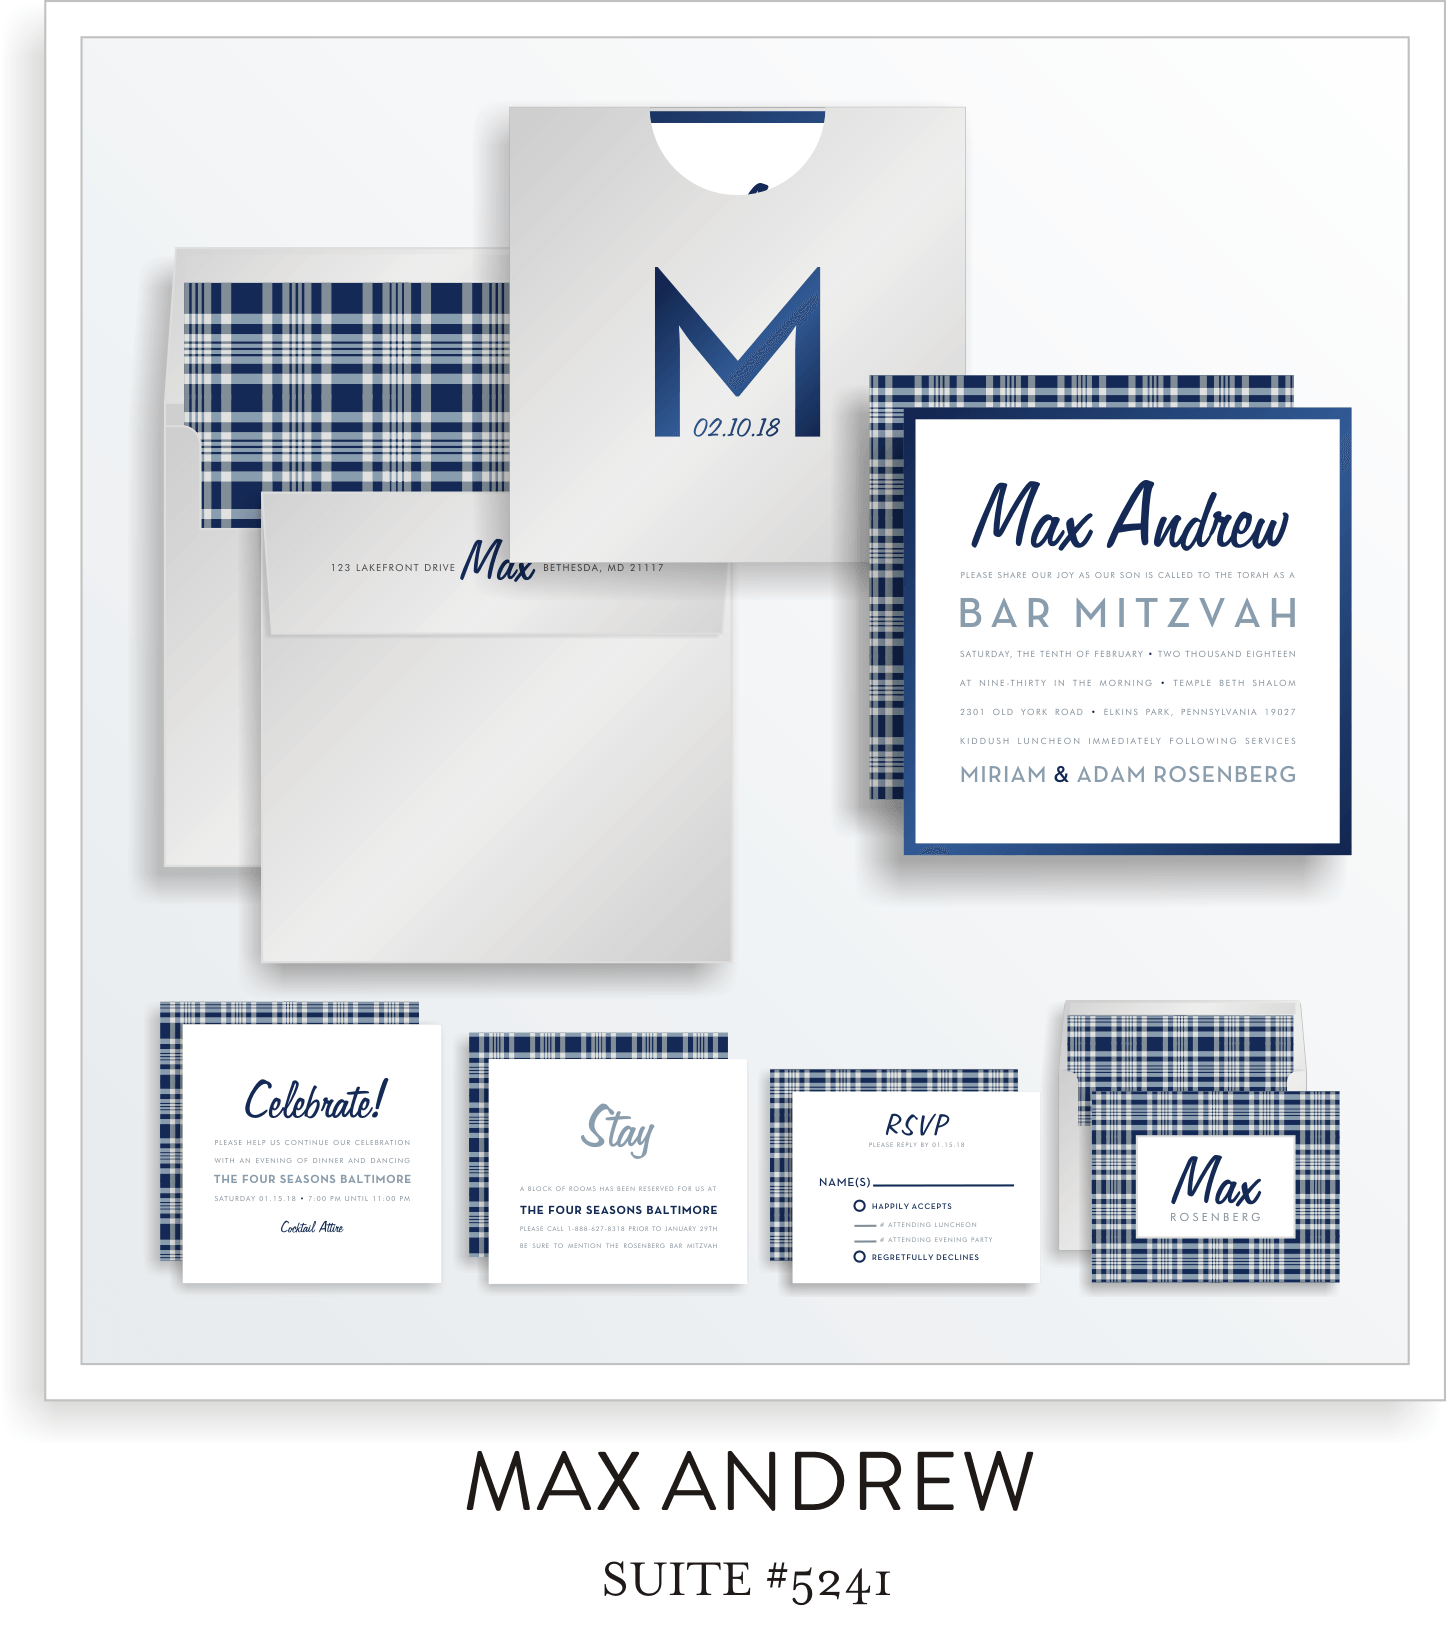 Copy of Bar Mitzvah Invitation Suite 5241 - Max Andrew